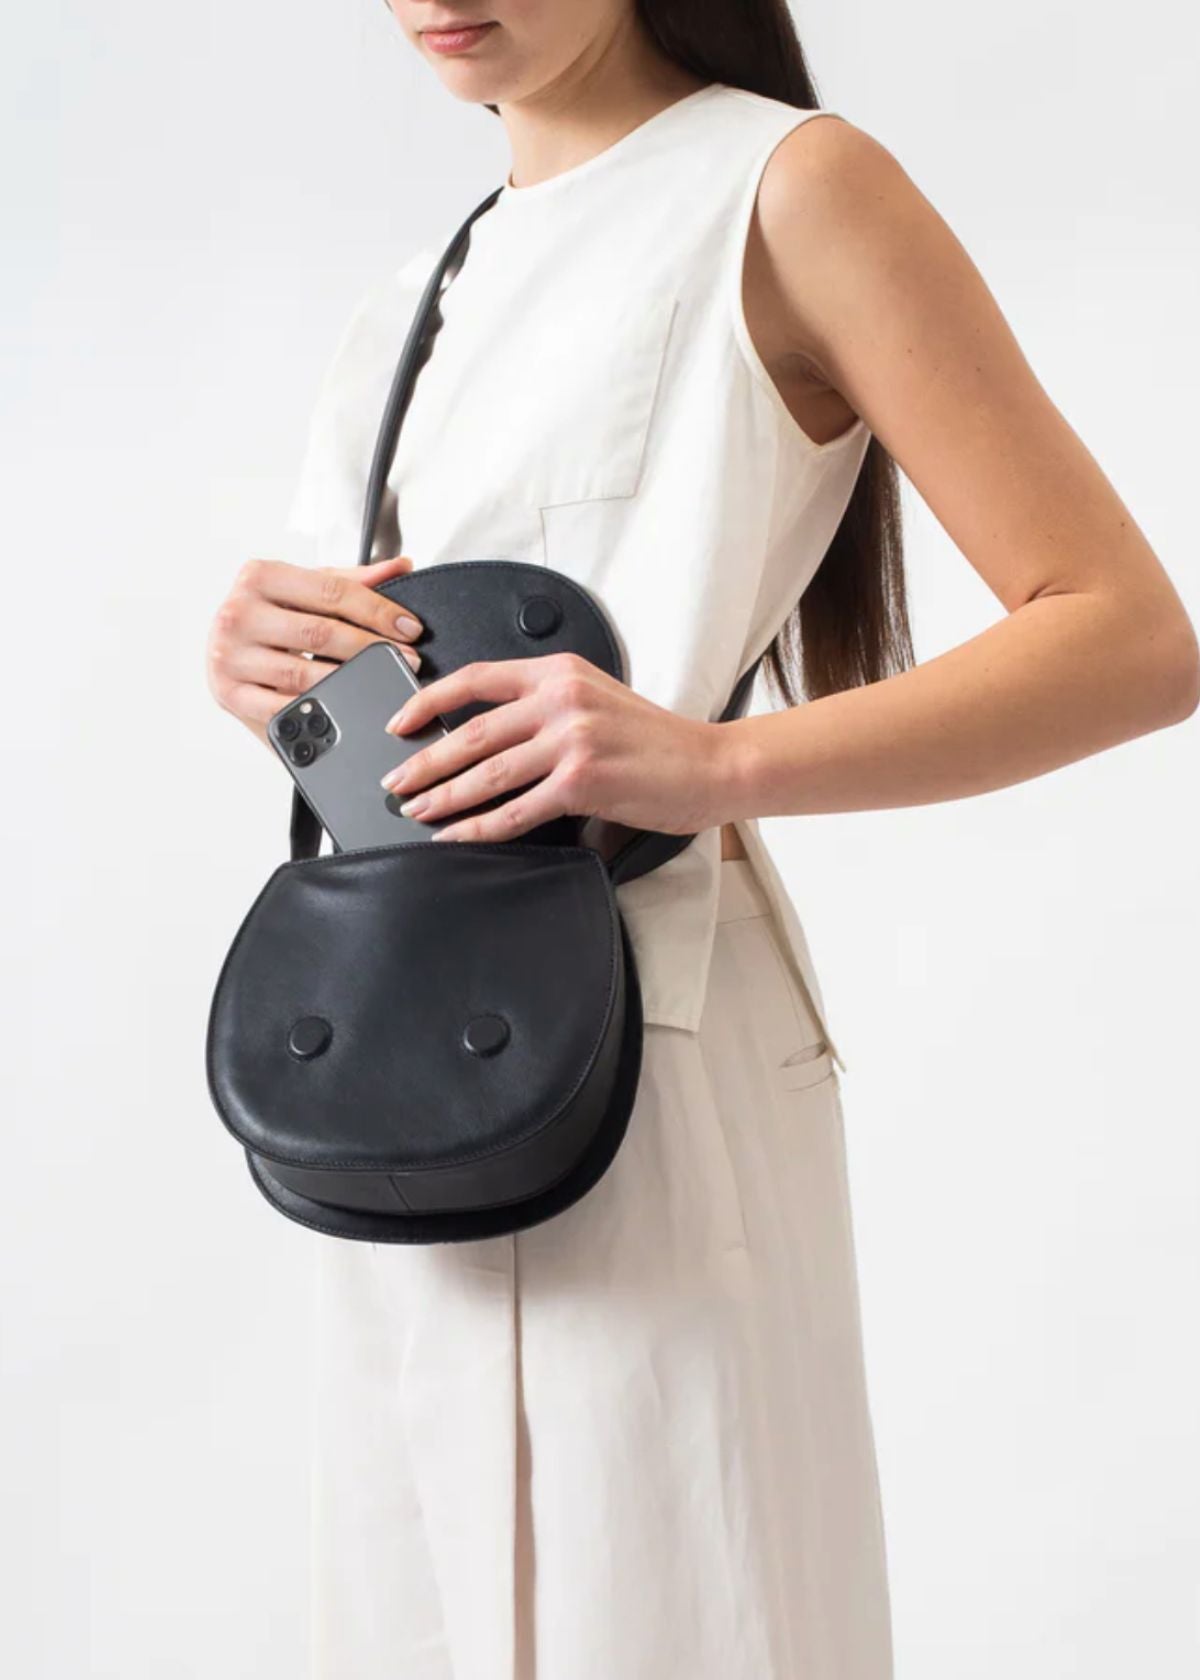 BEHNO Tilda Mini Saddle Bag Convertible Handbag - Black